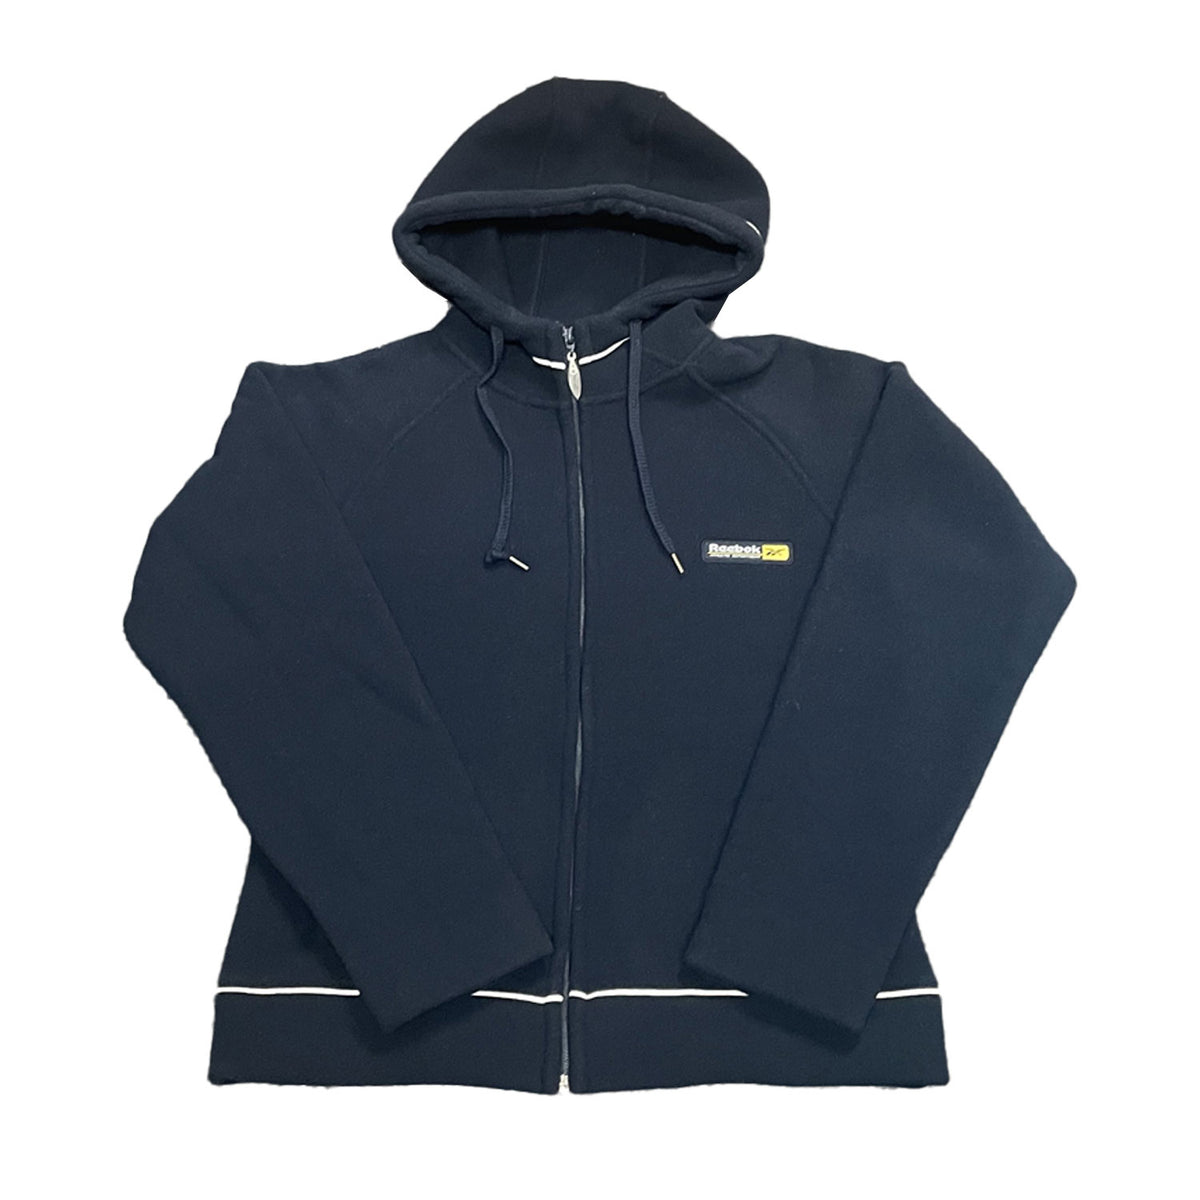 Reebok Womens Hooded Zipped Fleece Jacket - Navy - UK Size 12